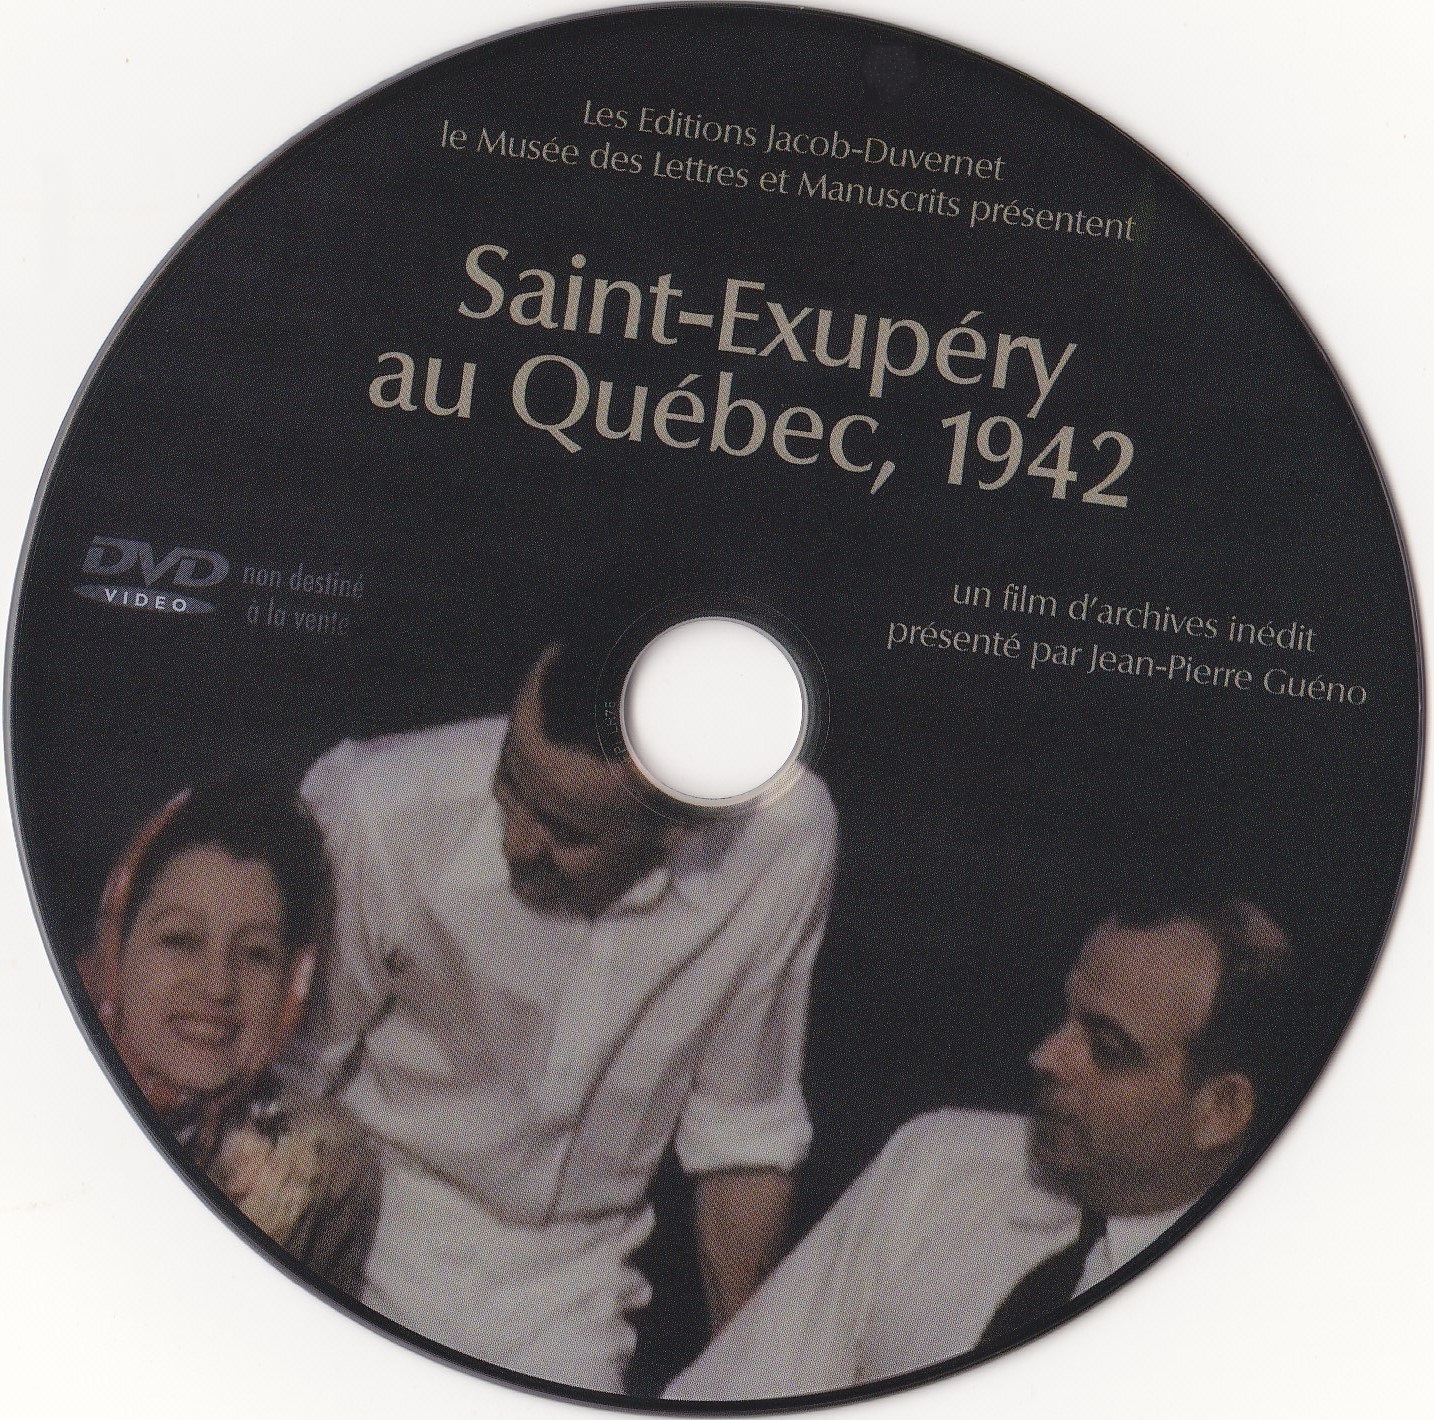 Saint-Exupry au Qubec, 1942